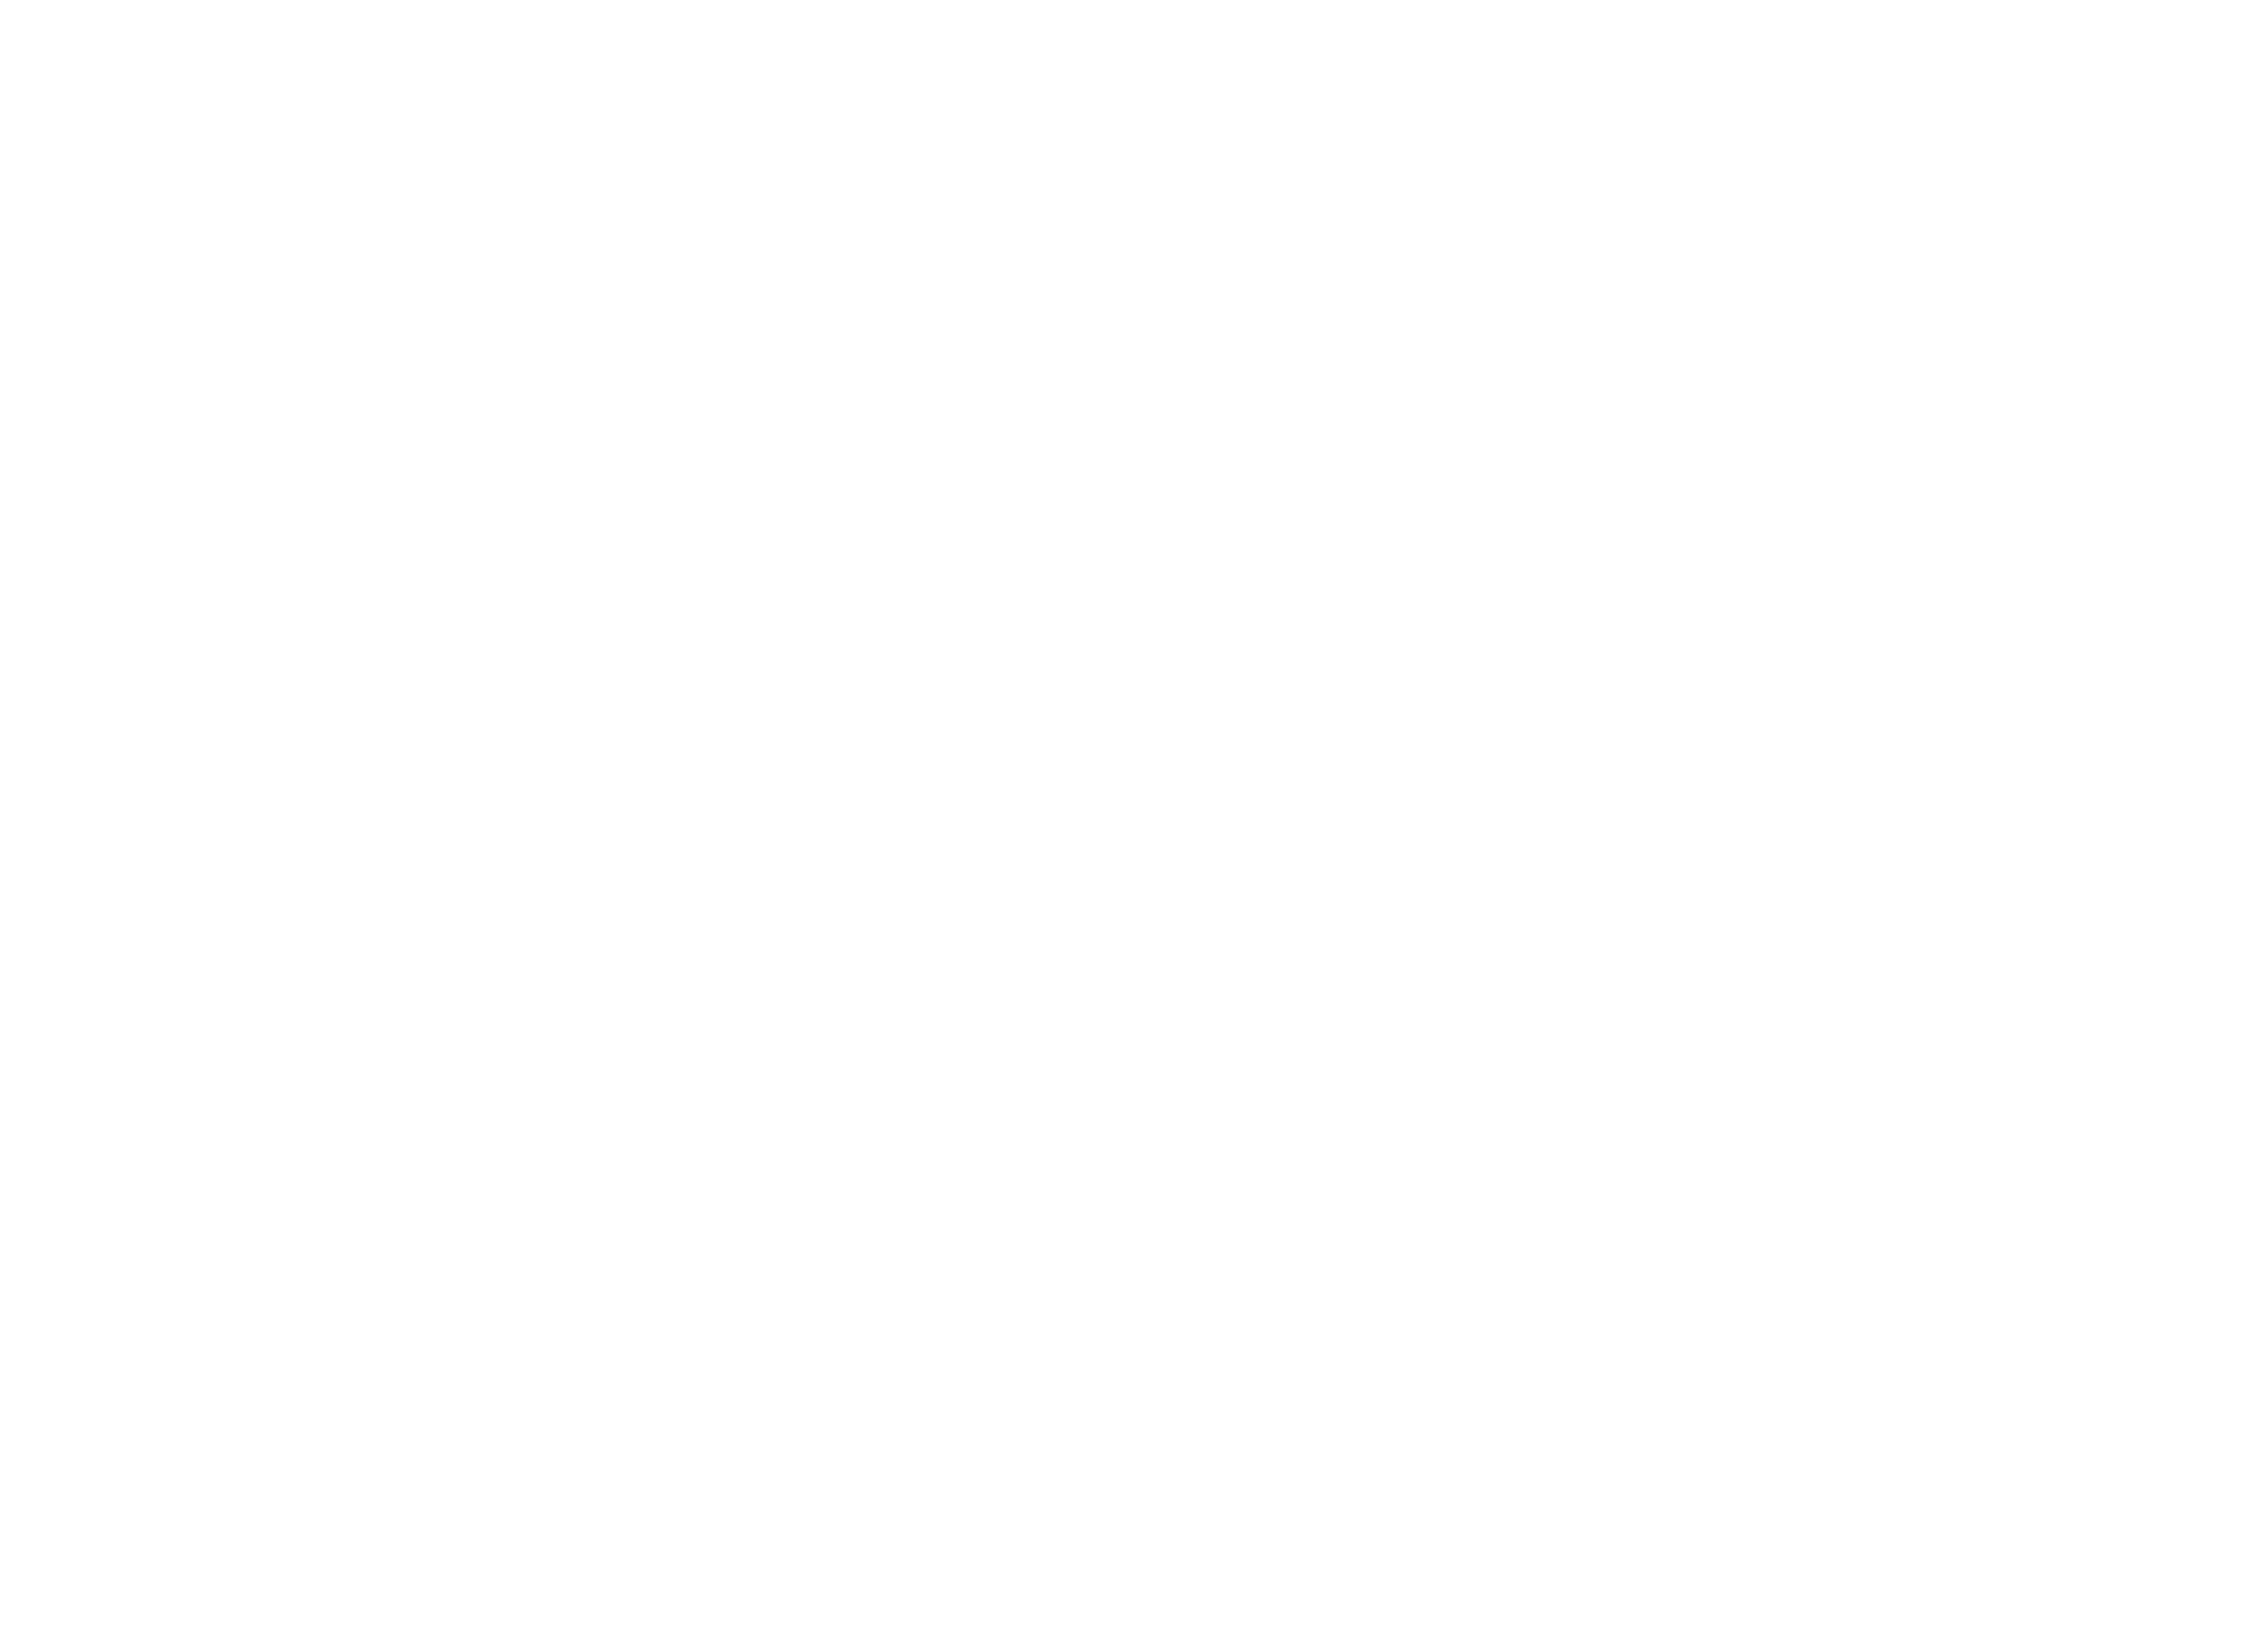 The SHARK SISTERS